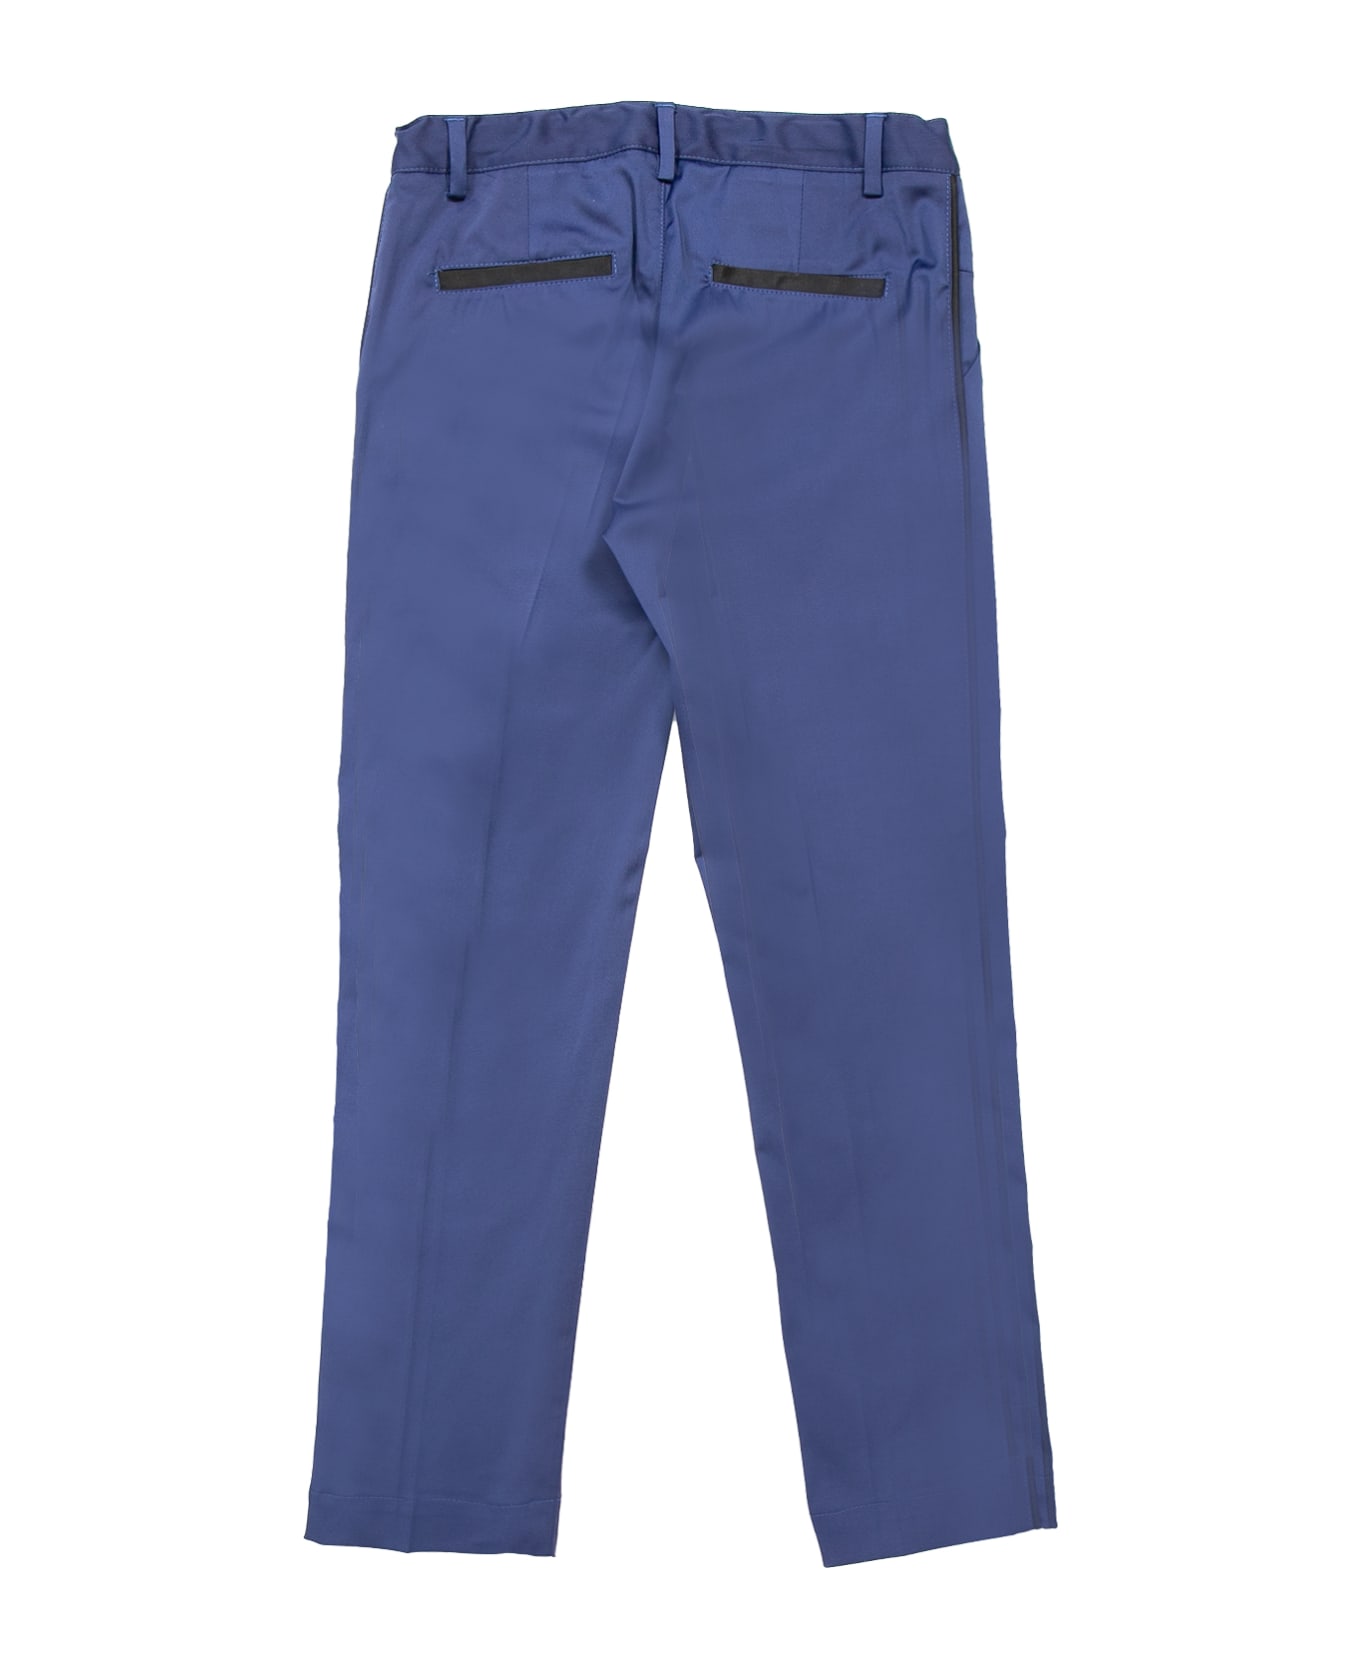 Paolo Pecora Cotton Blend Pants - Blue